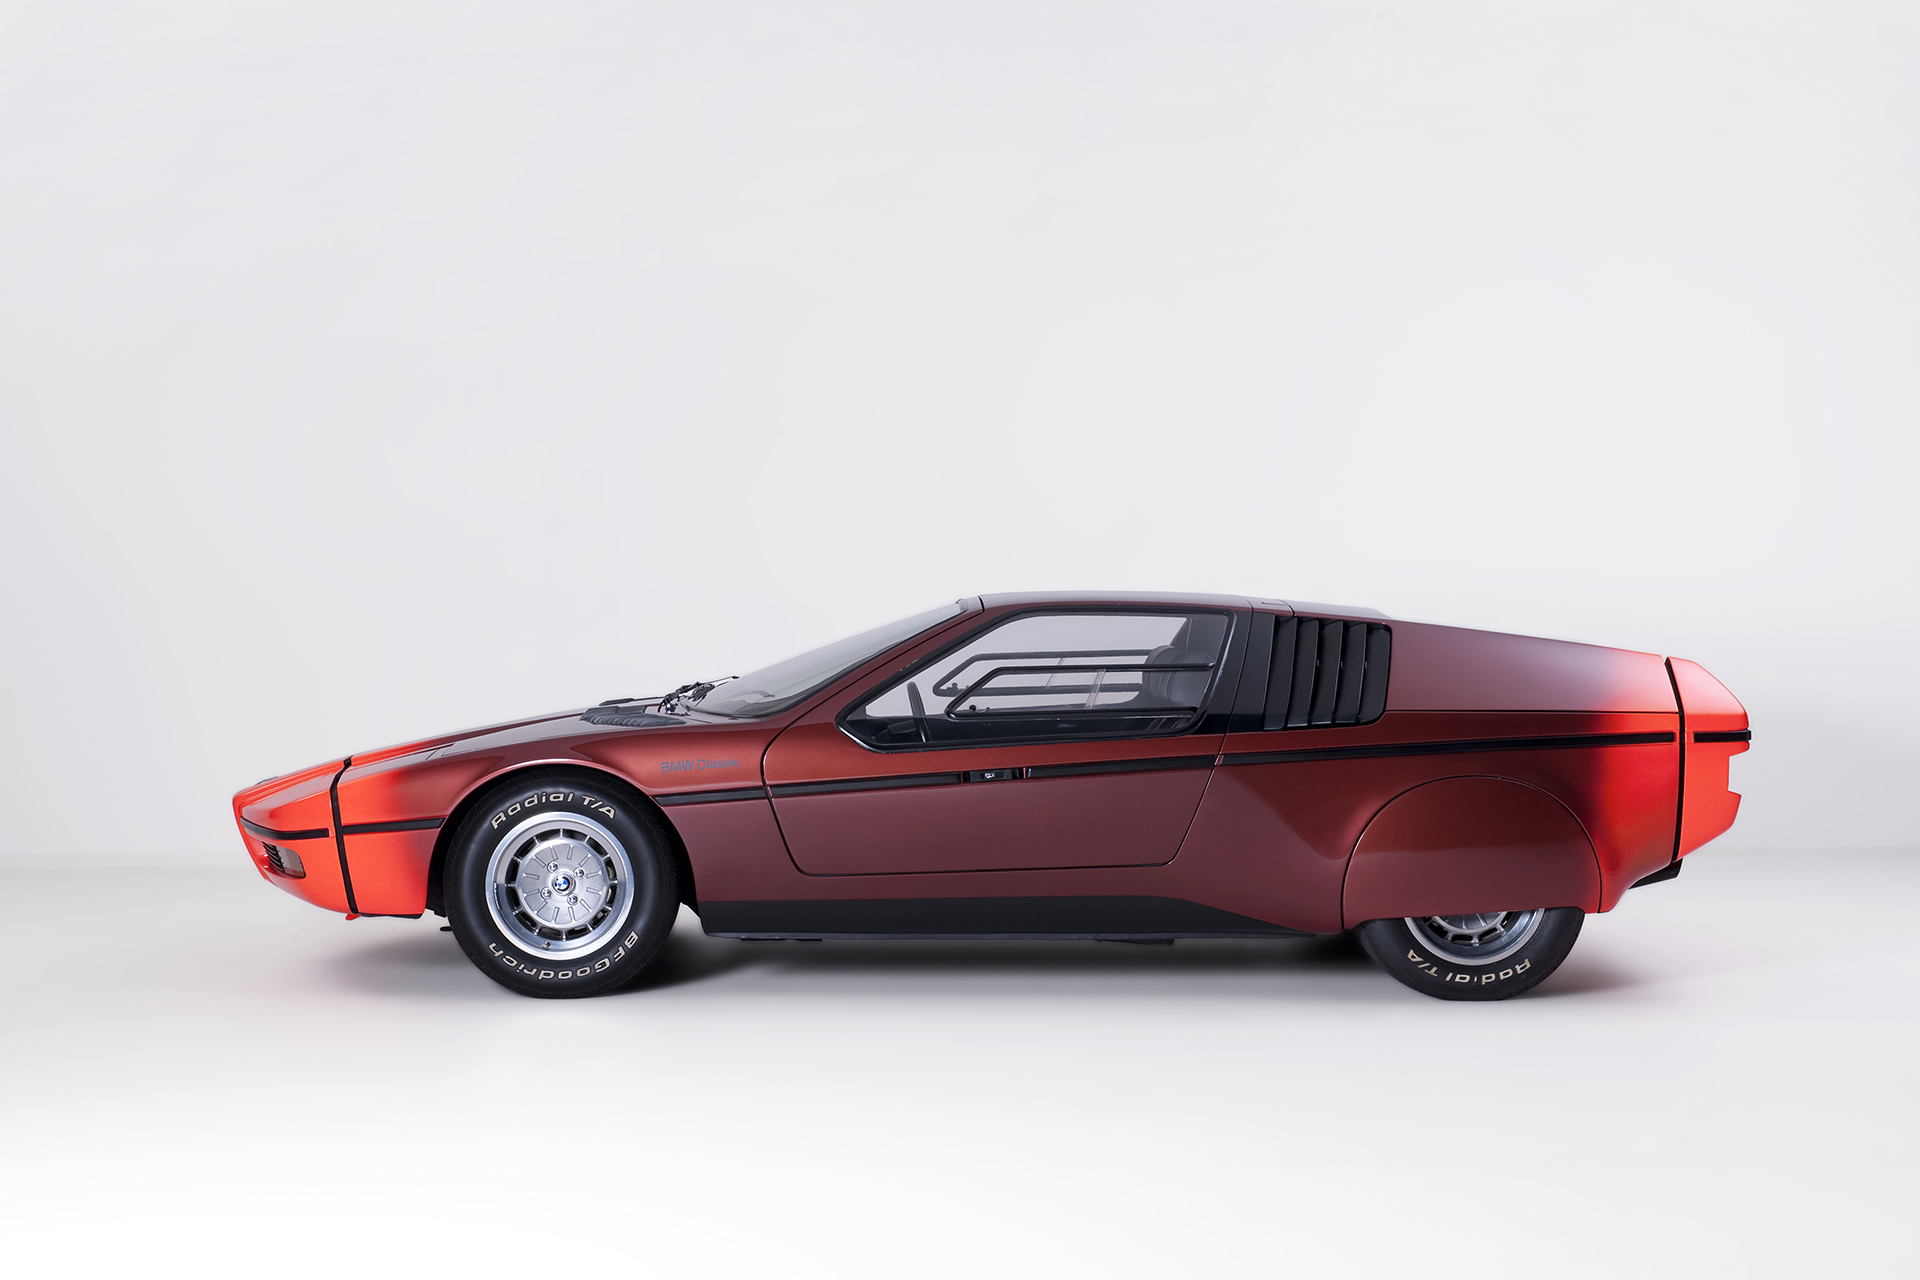 BMW Turbo Concept, 1972 - Photo: Hardy Mutschler